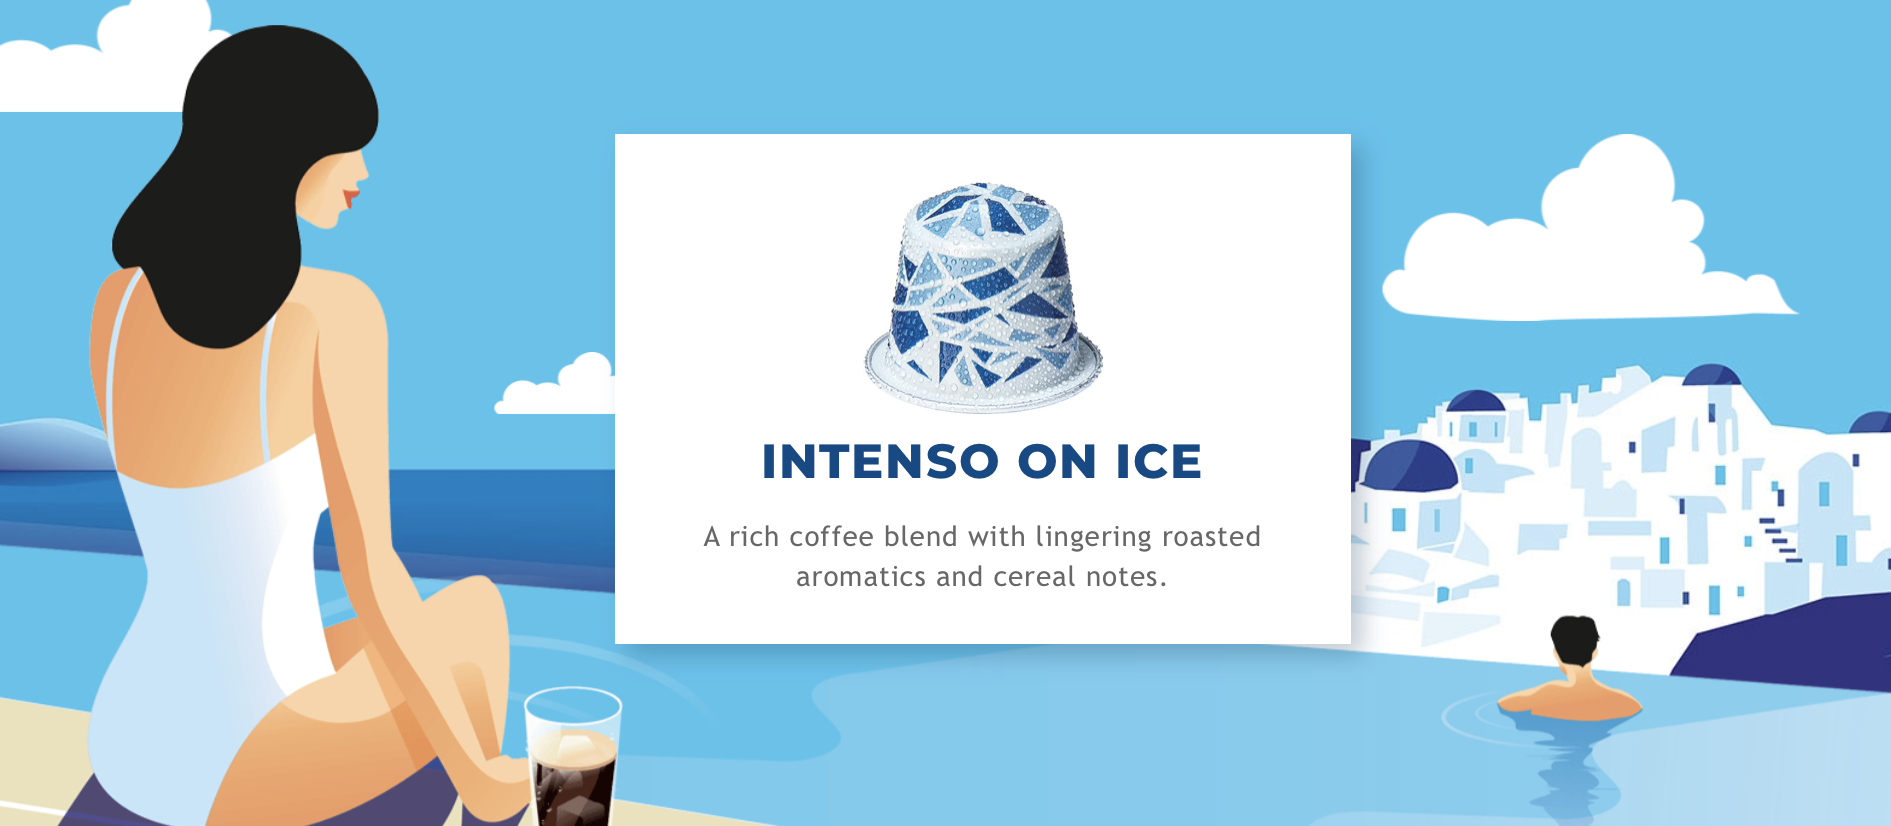 nespresso-on-ice-22018-07-14-11-05-11